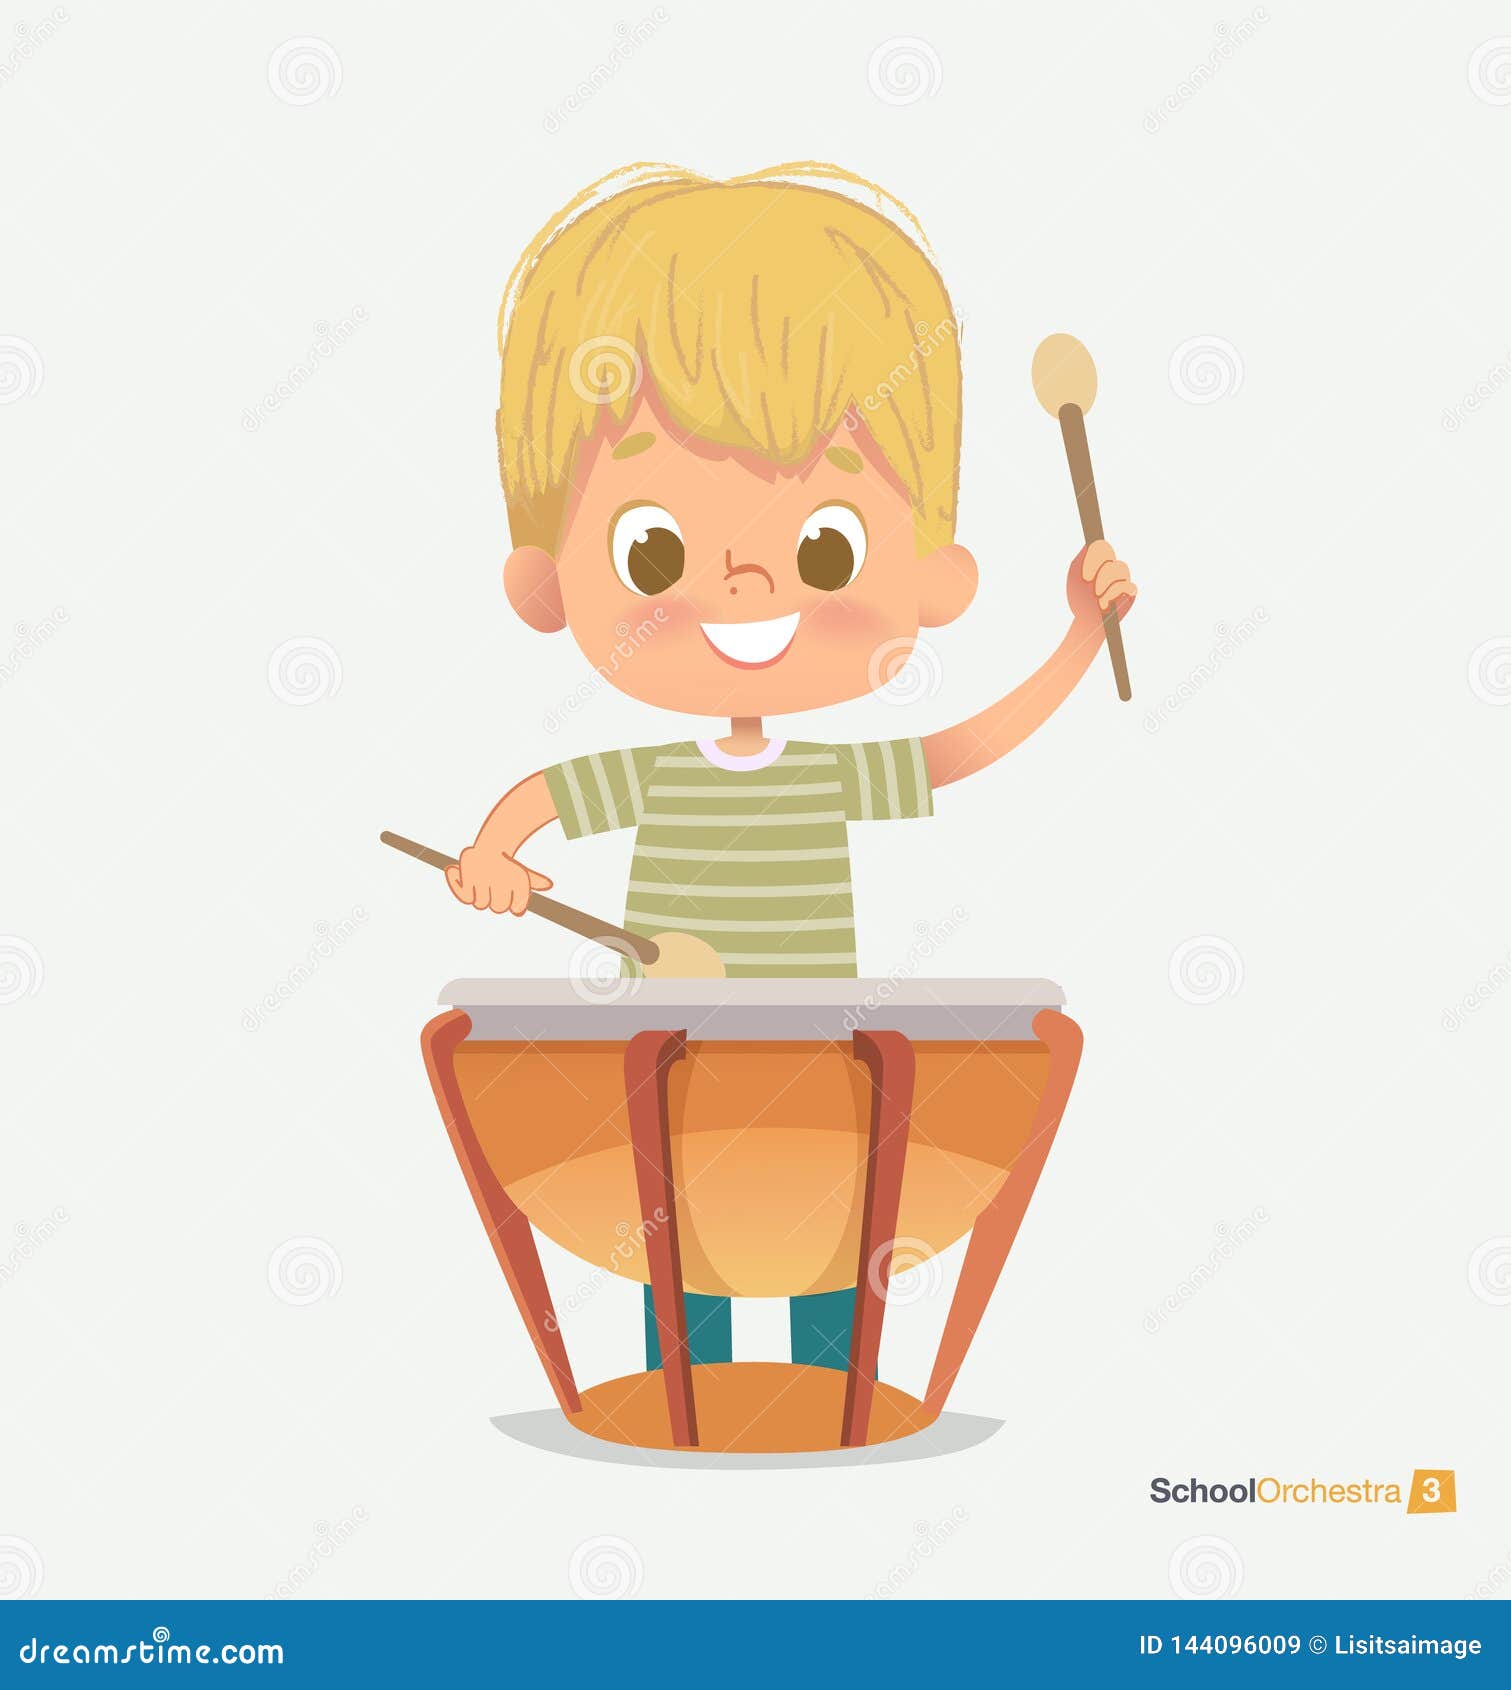 school orchestra smile boy play beats drum sticks